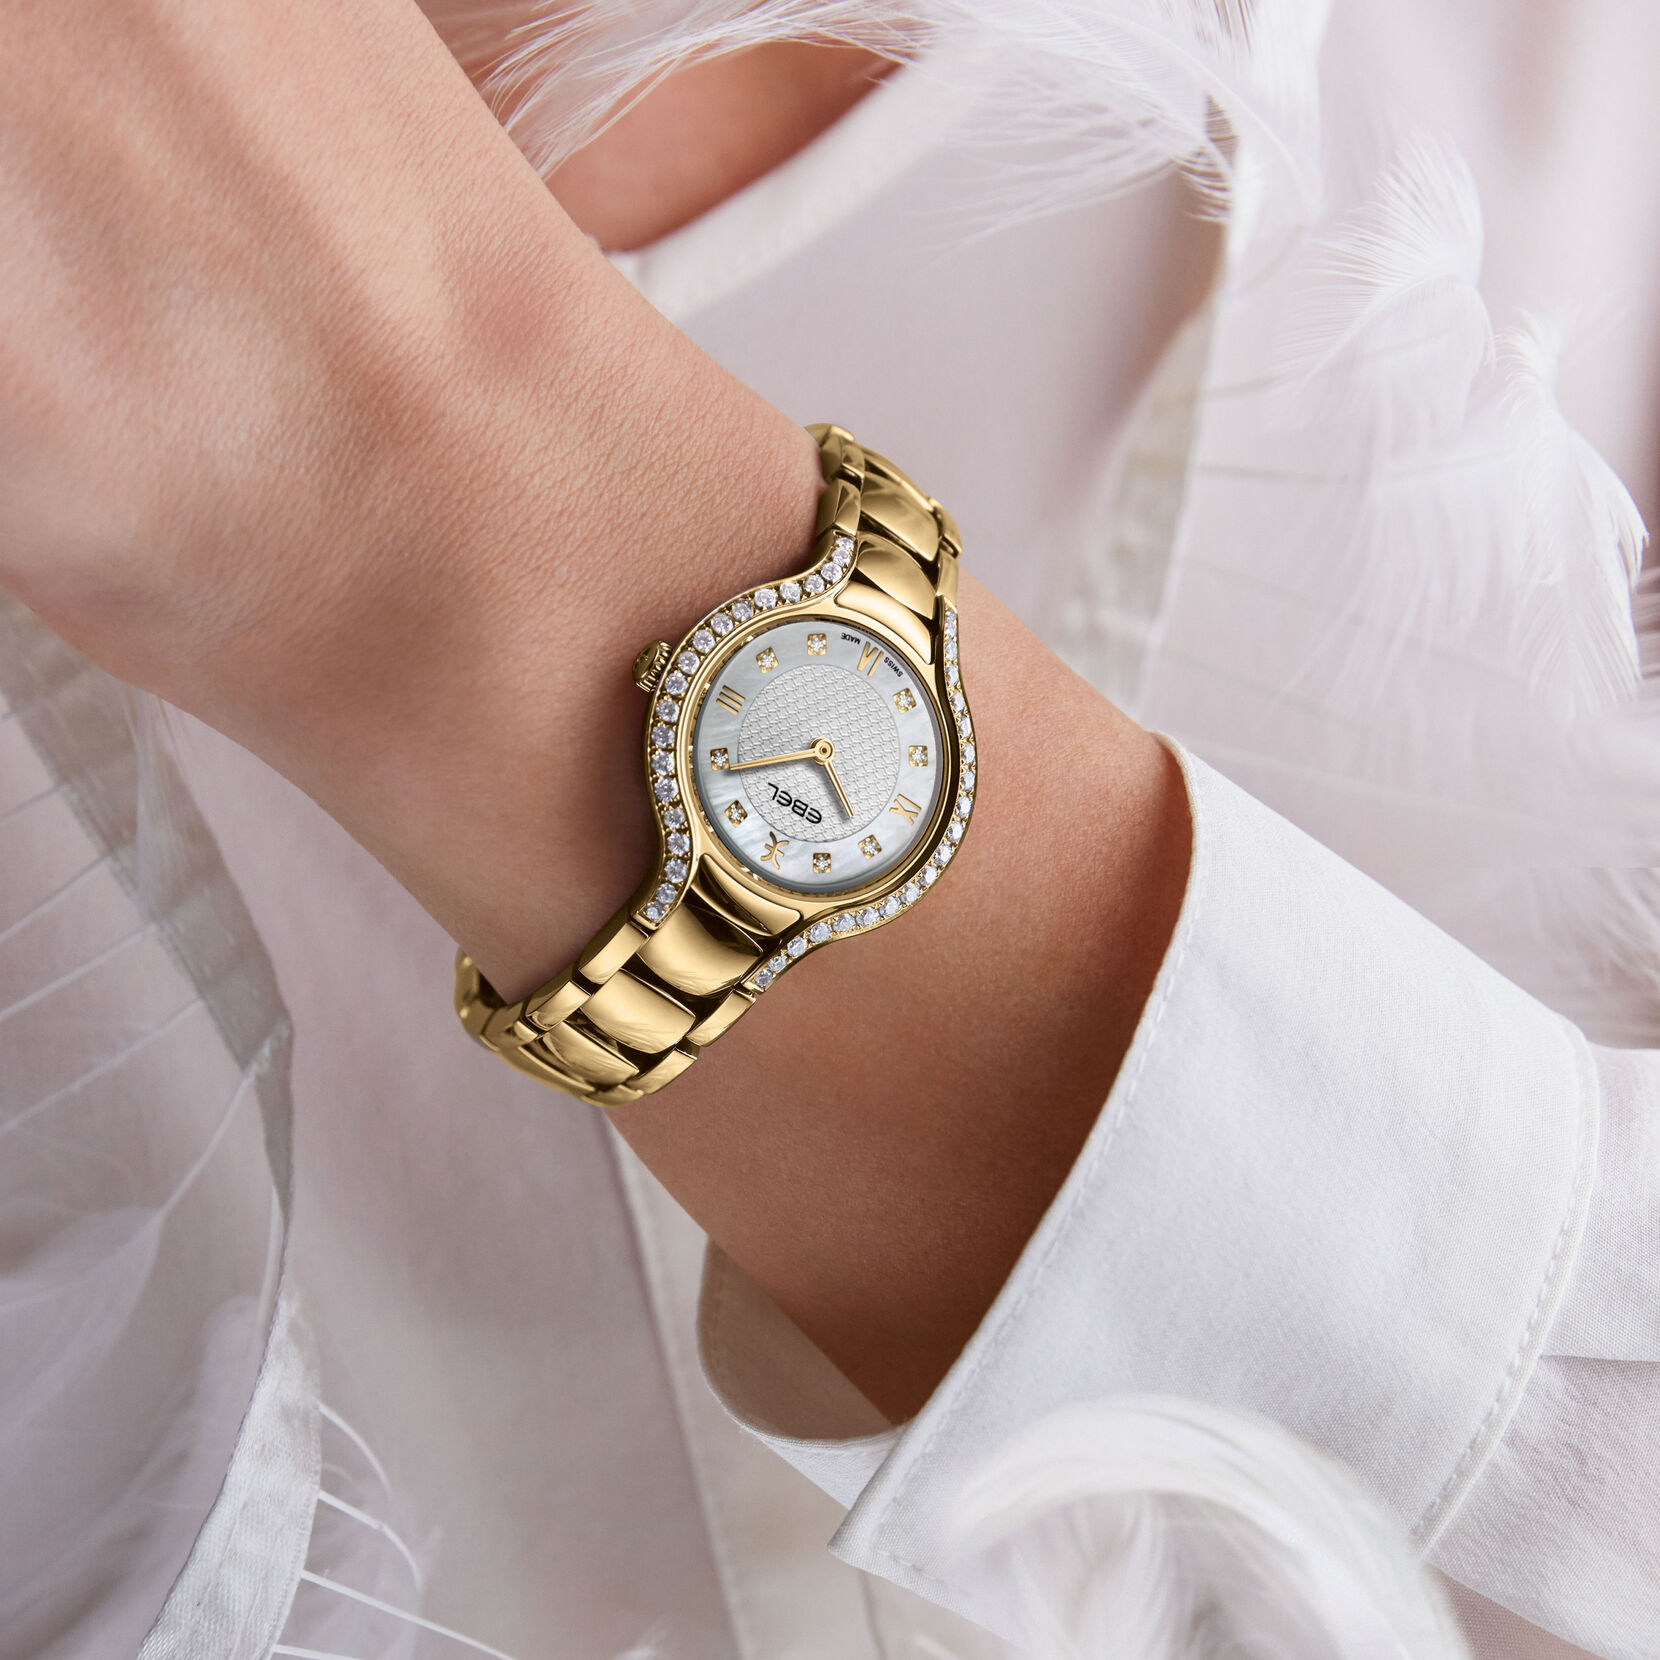 Ebel Beluga Yellow Gold Watch with Diamonds